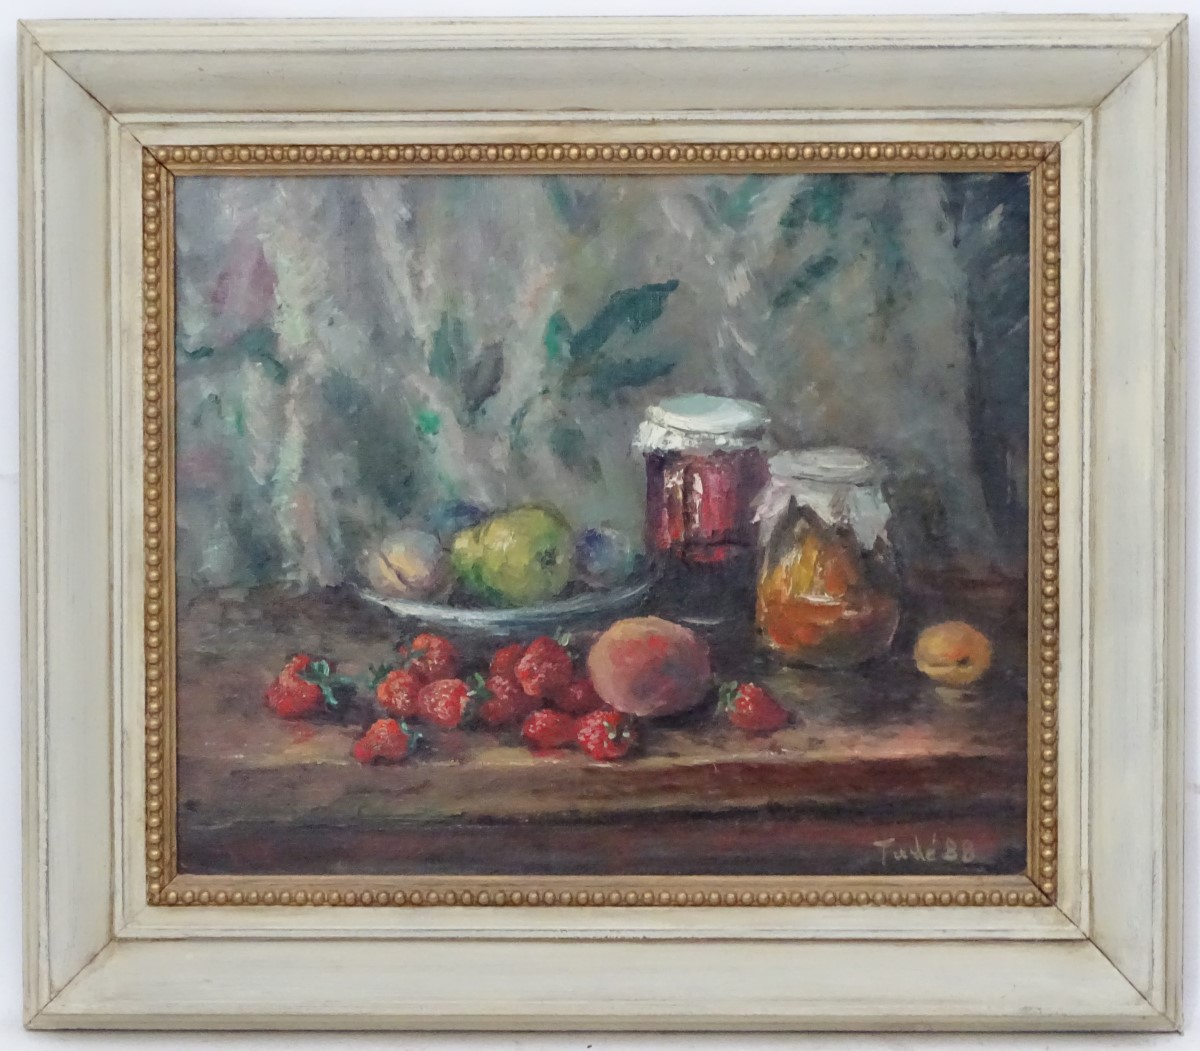 Tade Boronski, 1988, Oil on canvas, Still life, strawberries, potted jam etc.